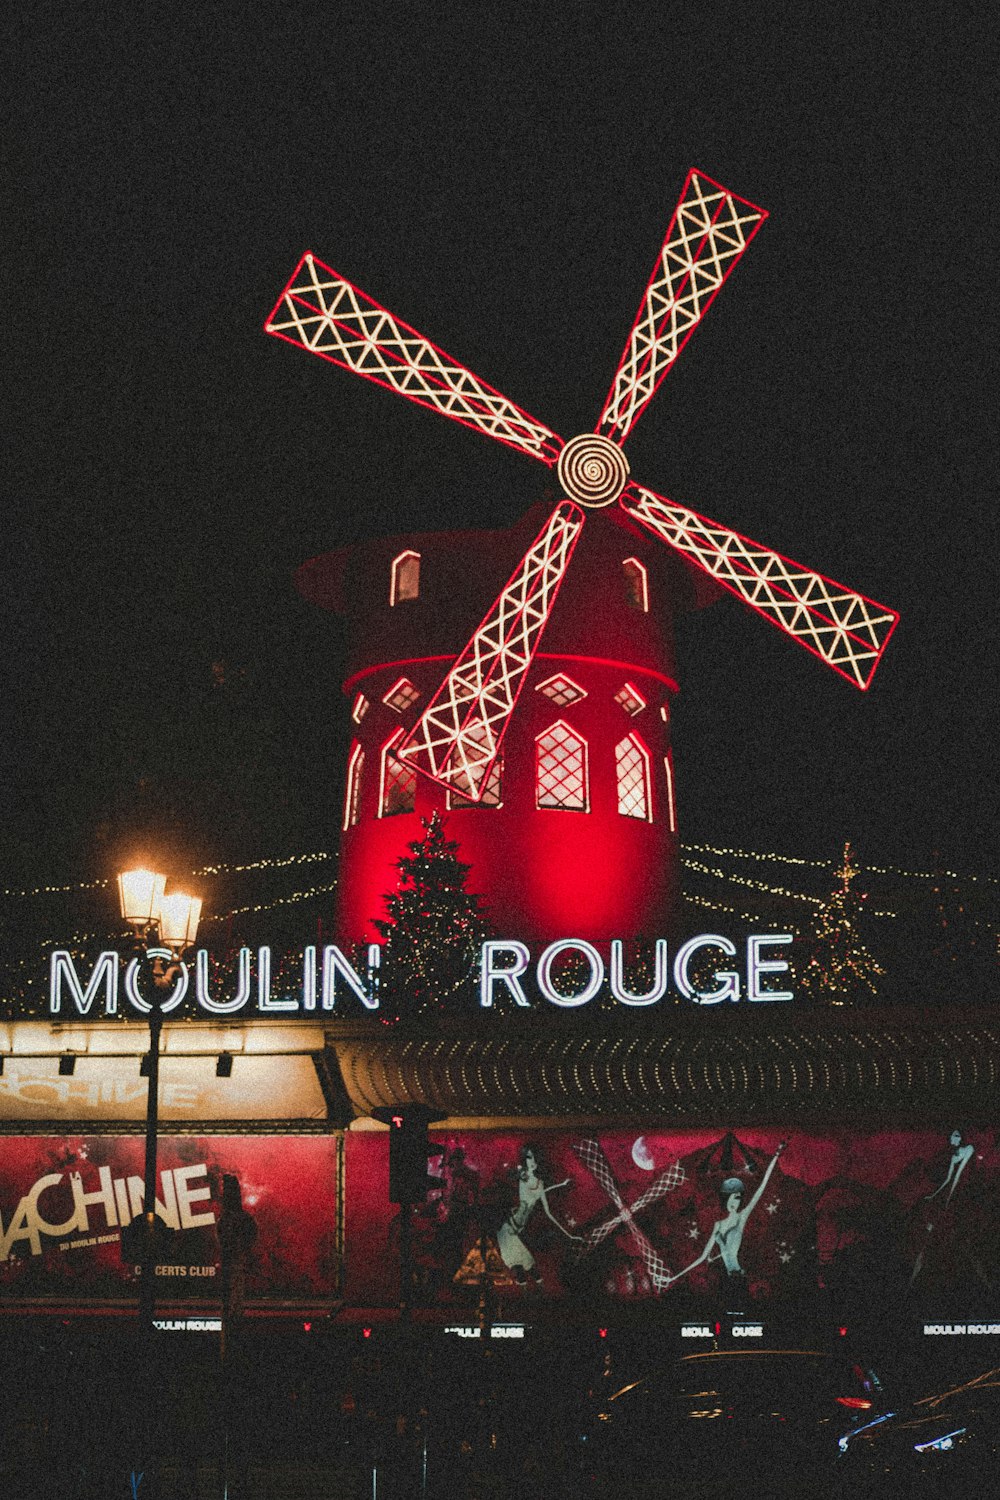 Taberna Moulin Rouge